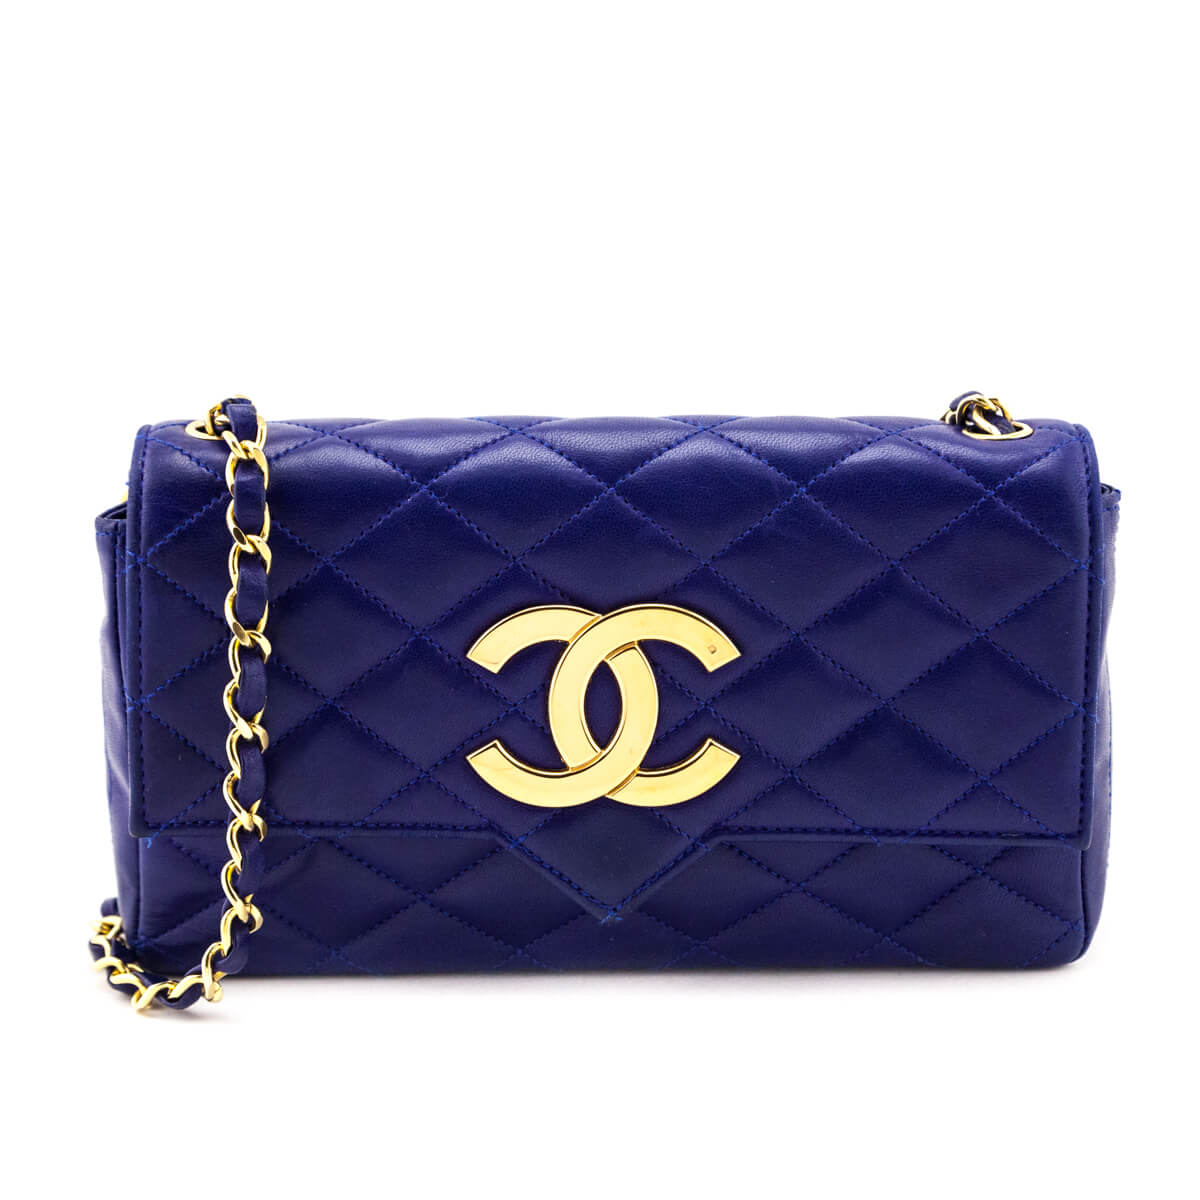 Chanel - Preowned Designer Handbags & Clothing - Love that Bag etc